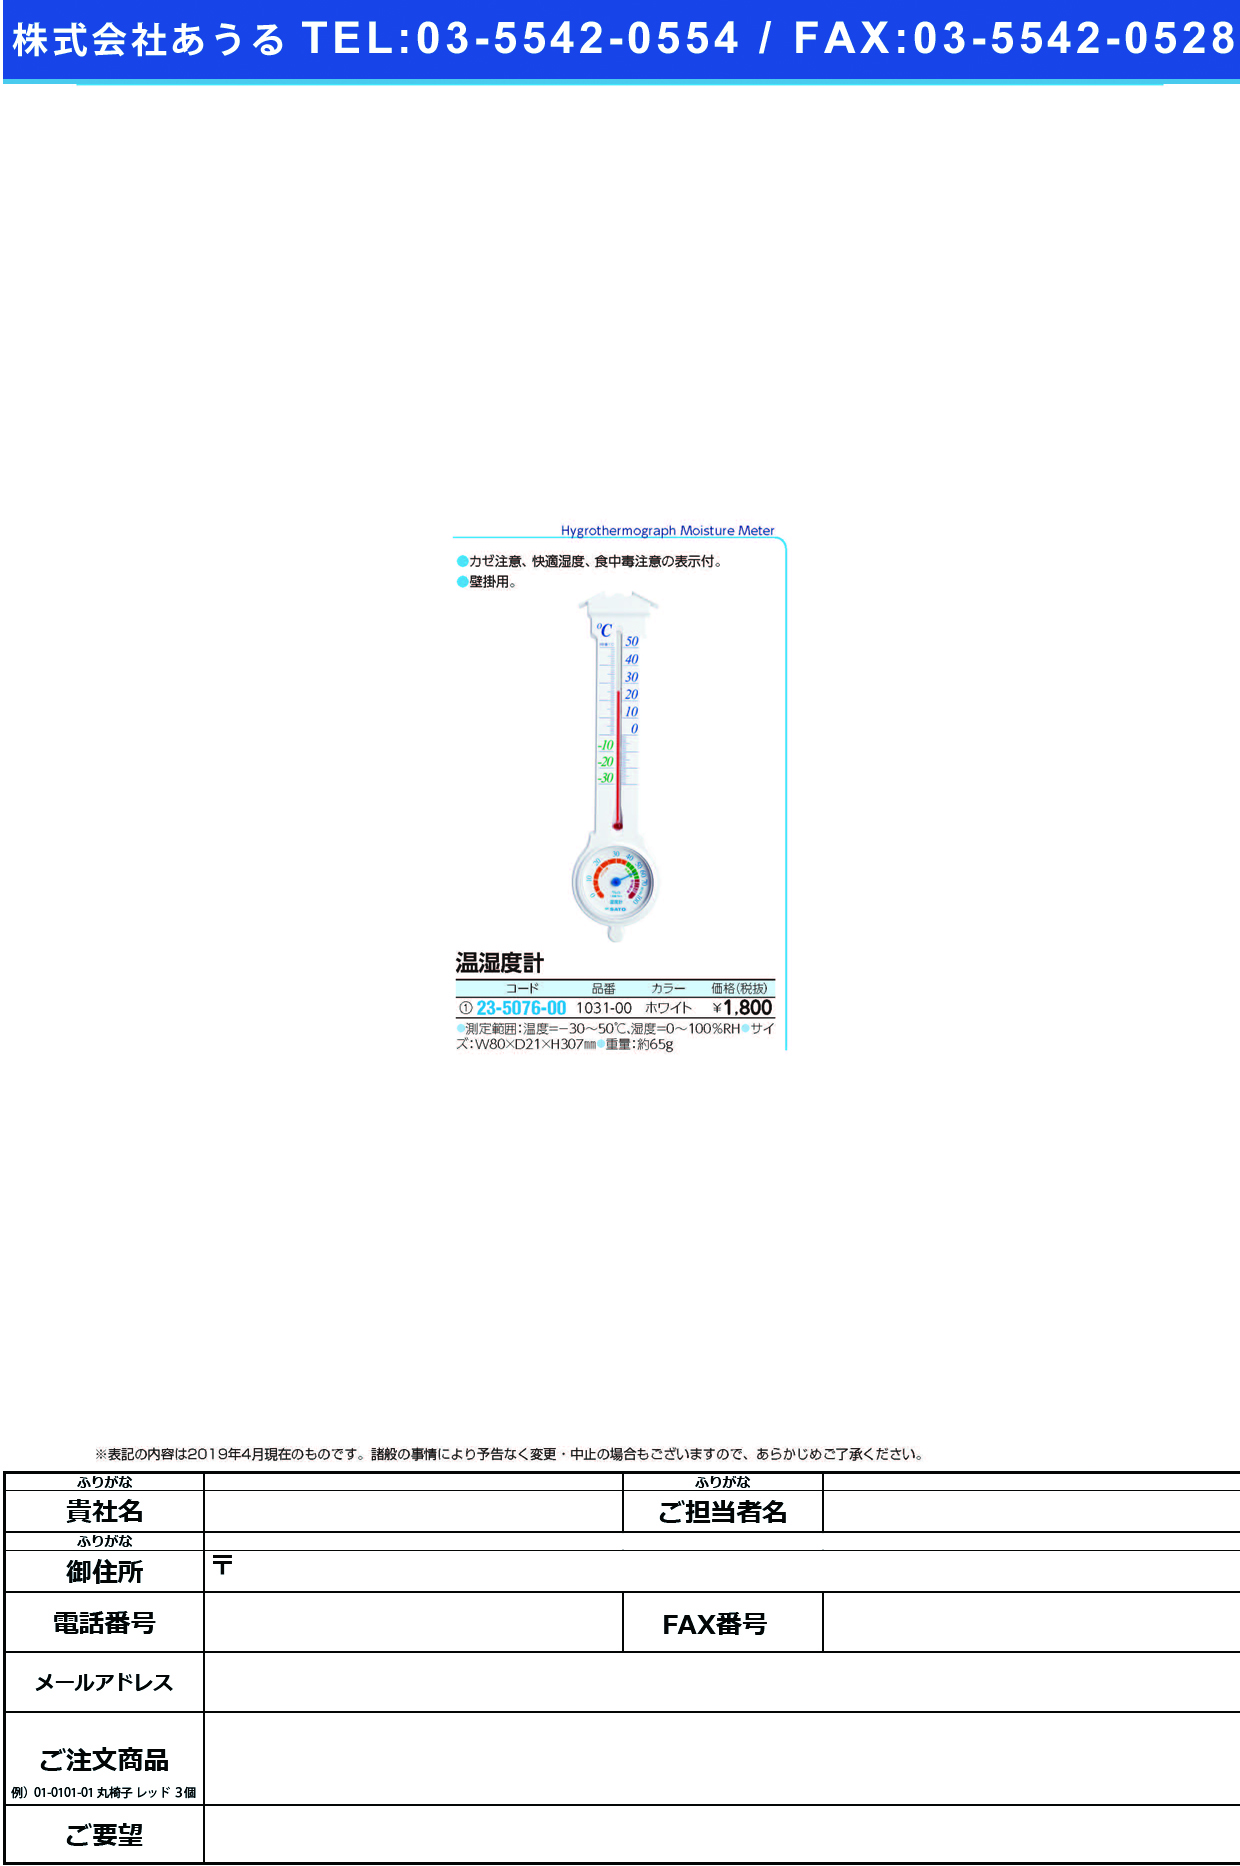 (23-5076-00)温湿度計ミルノＥＸ 1031-00(ﾎﾜｲﾄ) ｵﾝｼﾂﾄﾞｹｲﾐﾙﾉEX【1個単位】【2019年カタログ商品】